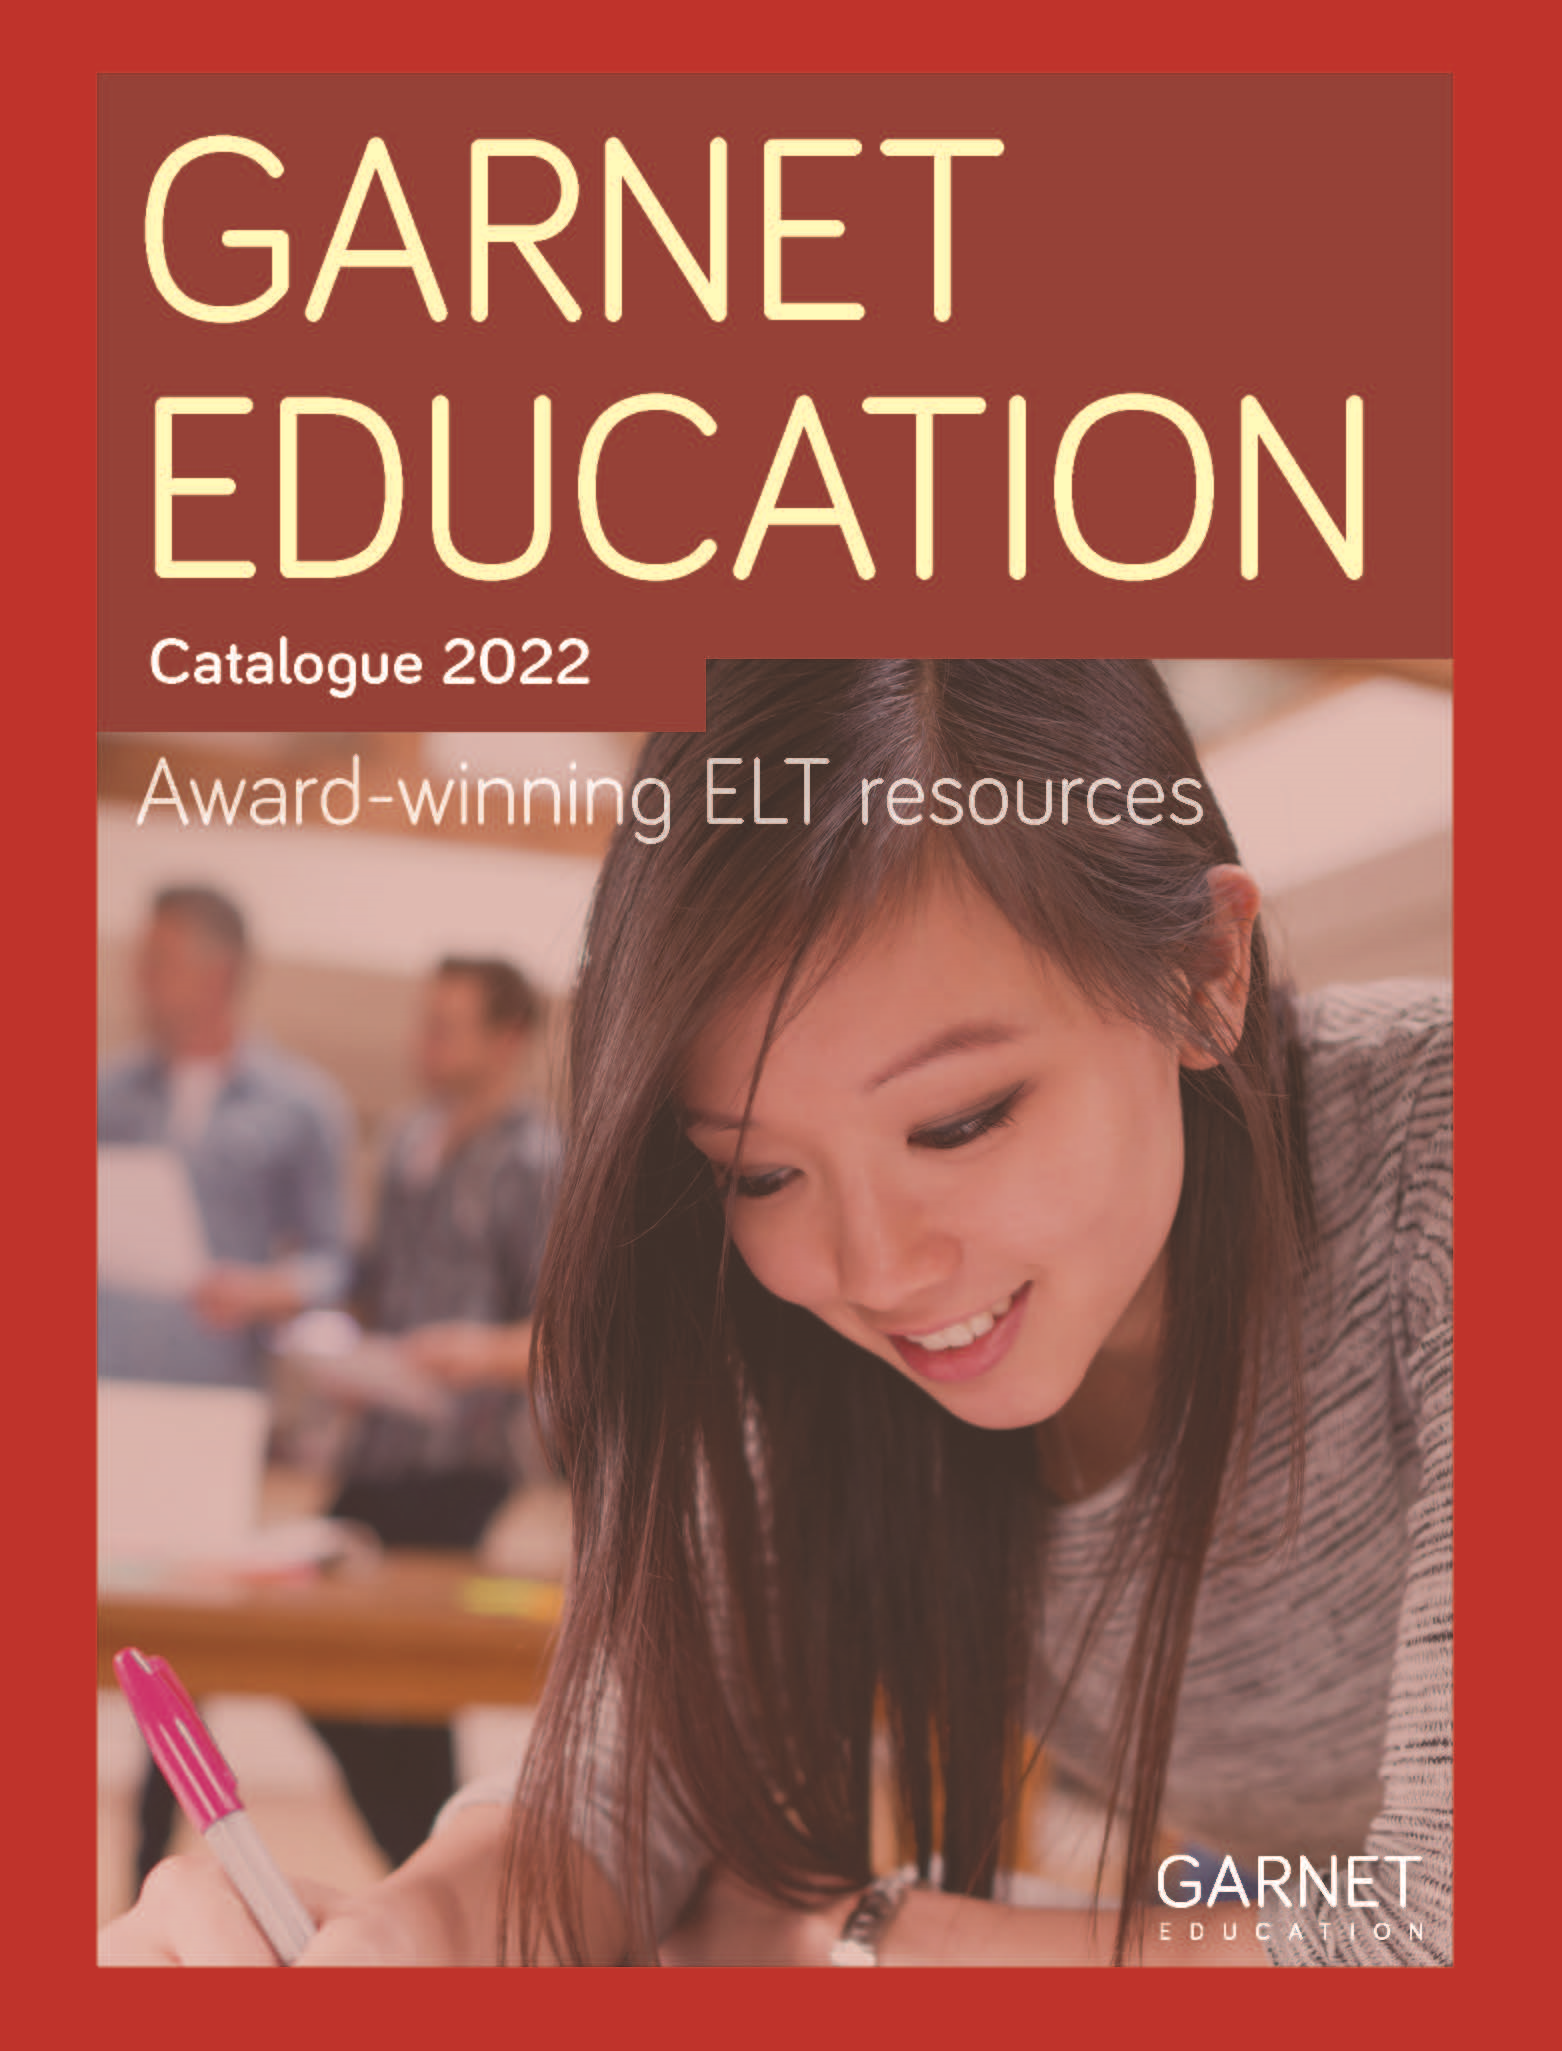 GARNET EDUCATION (UK)